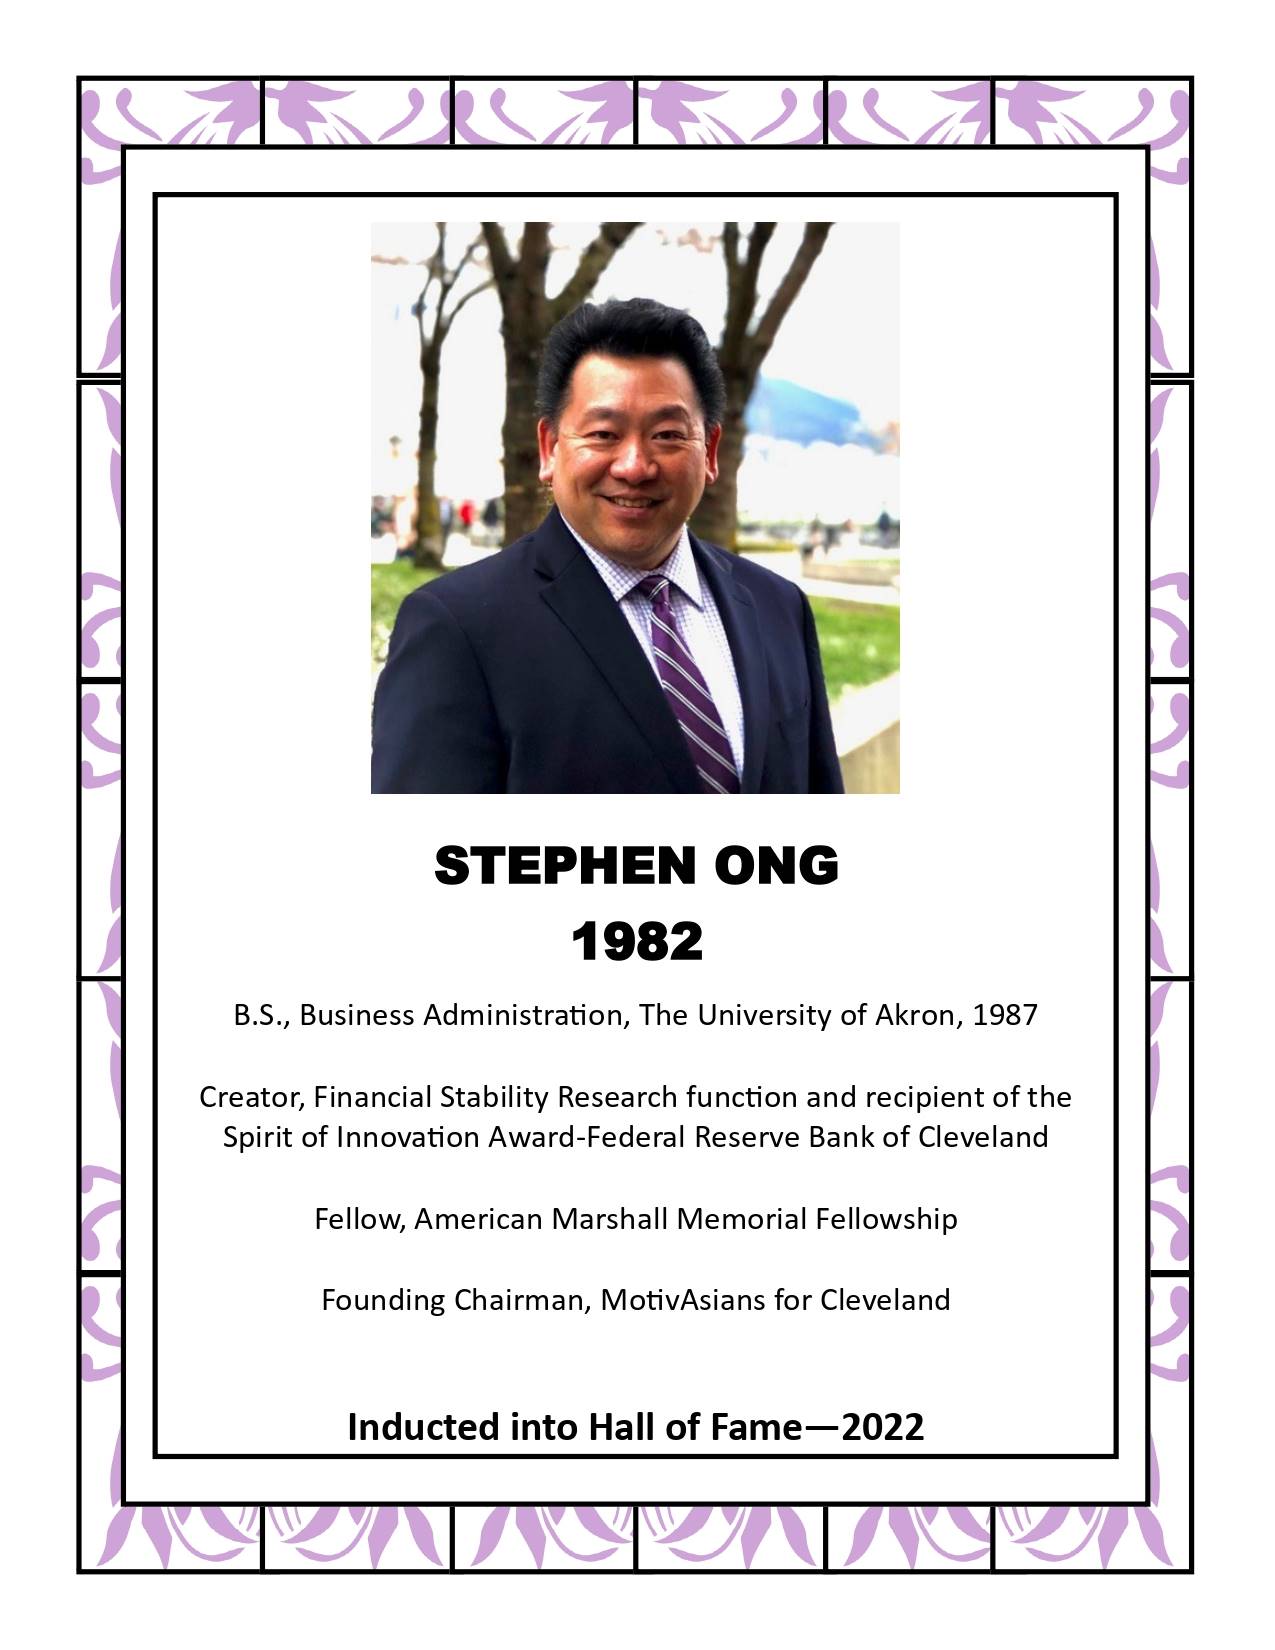 Stephen Ong